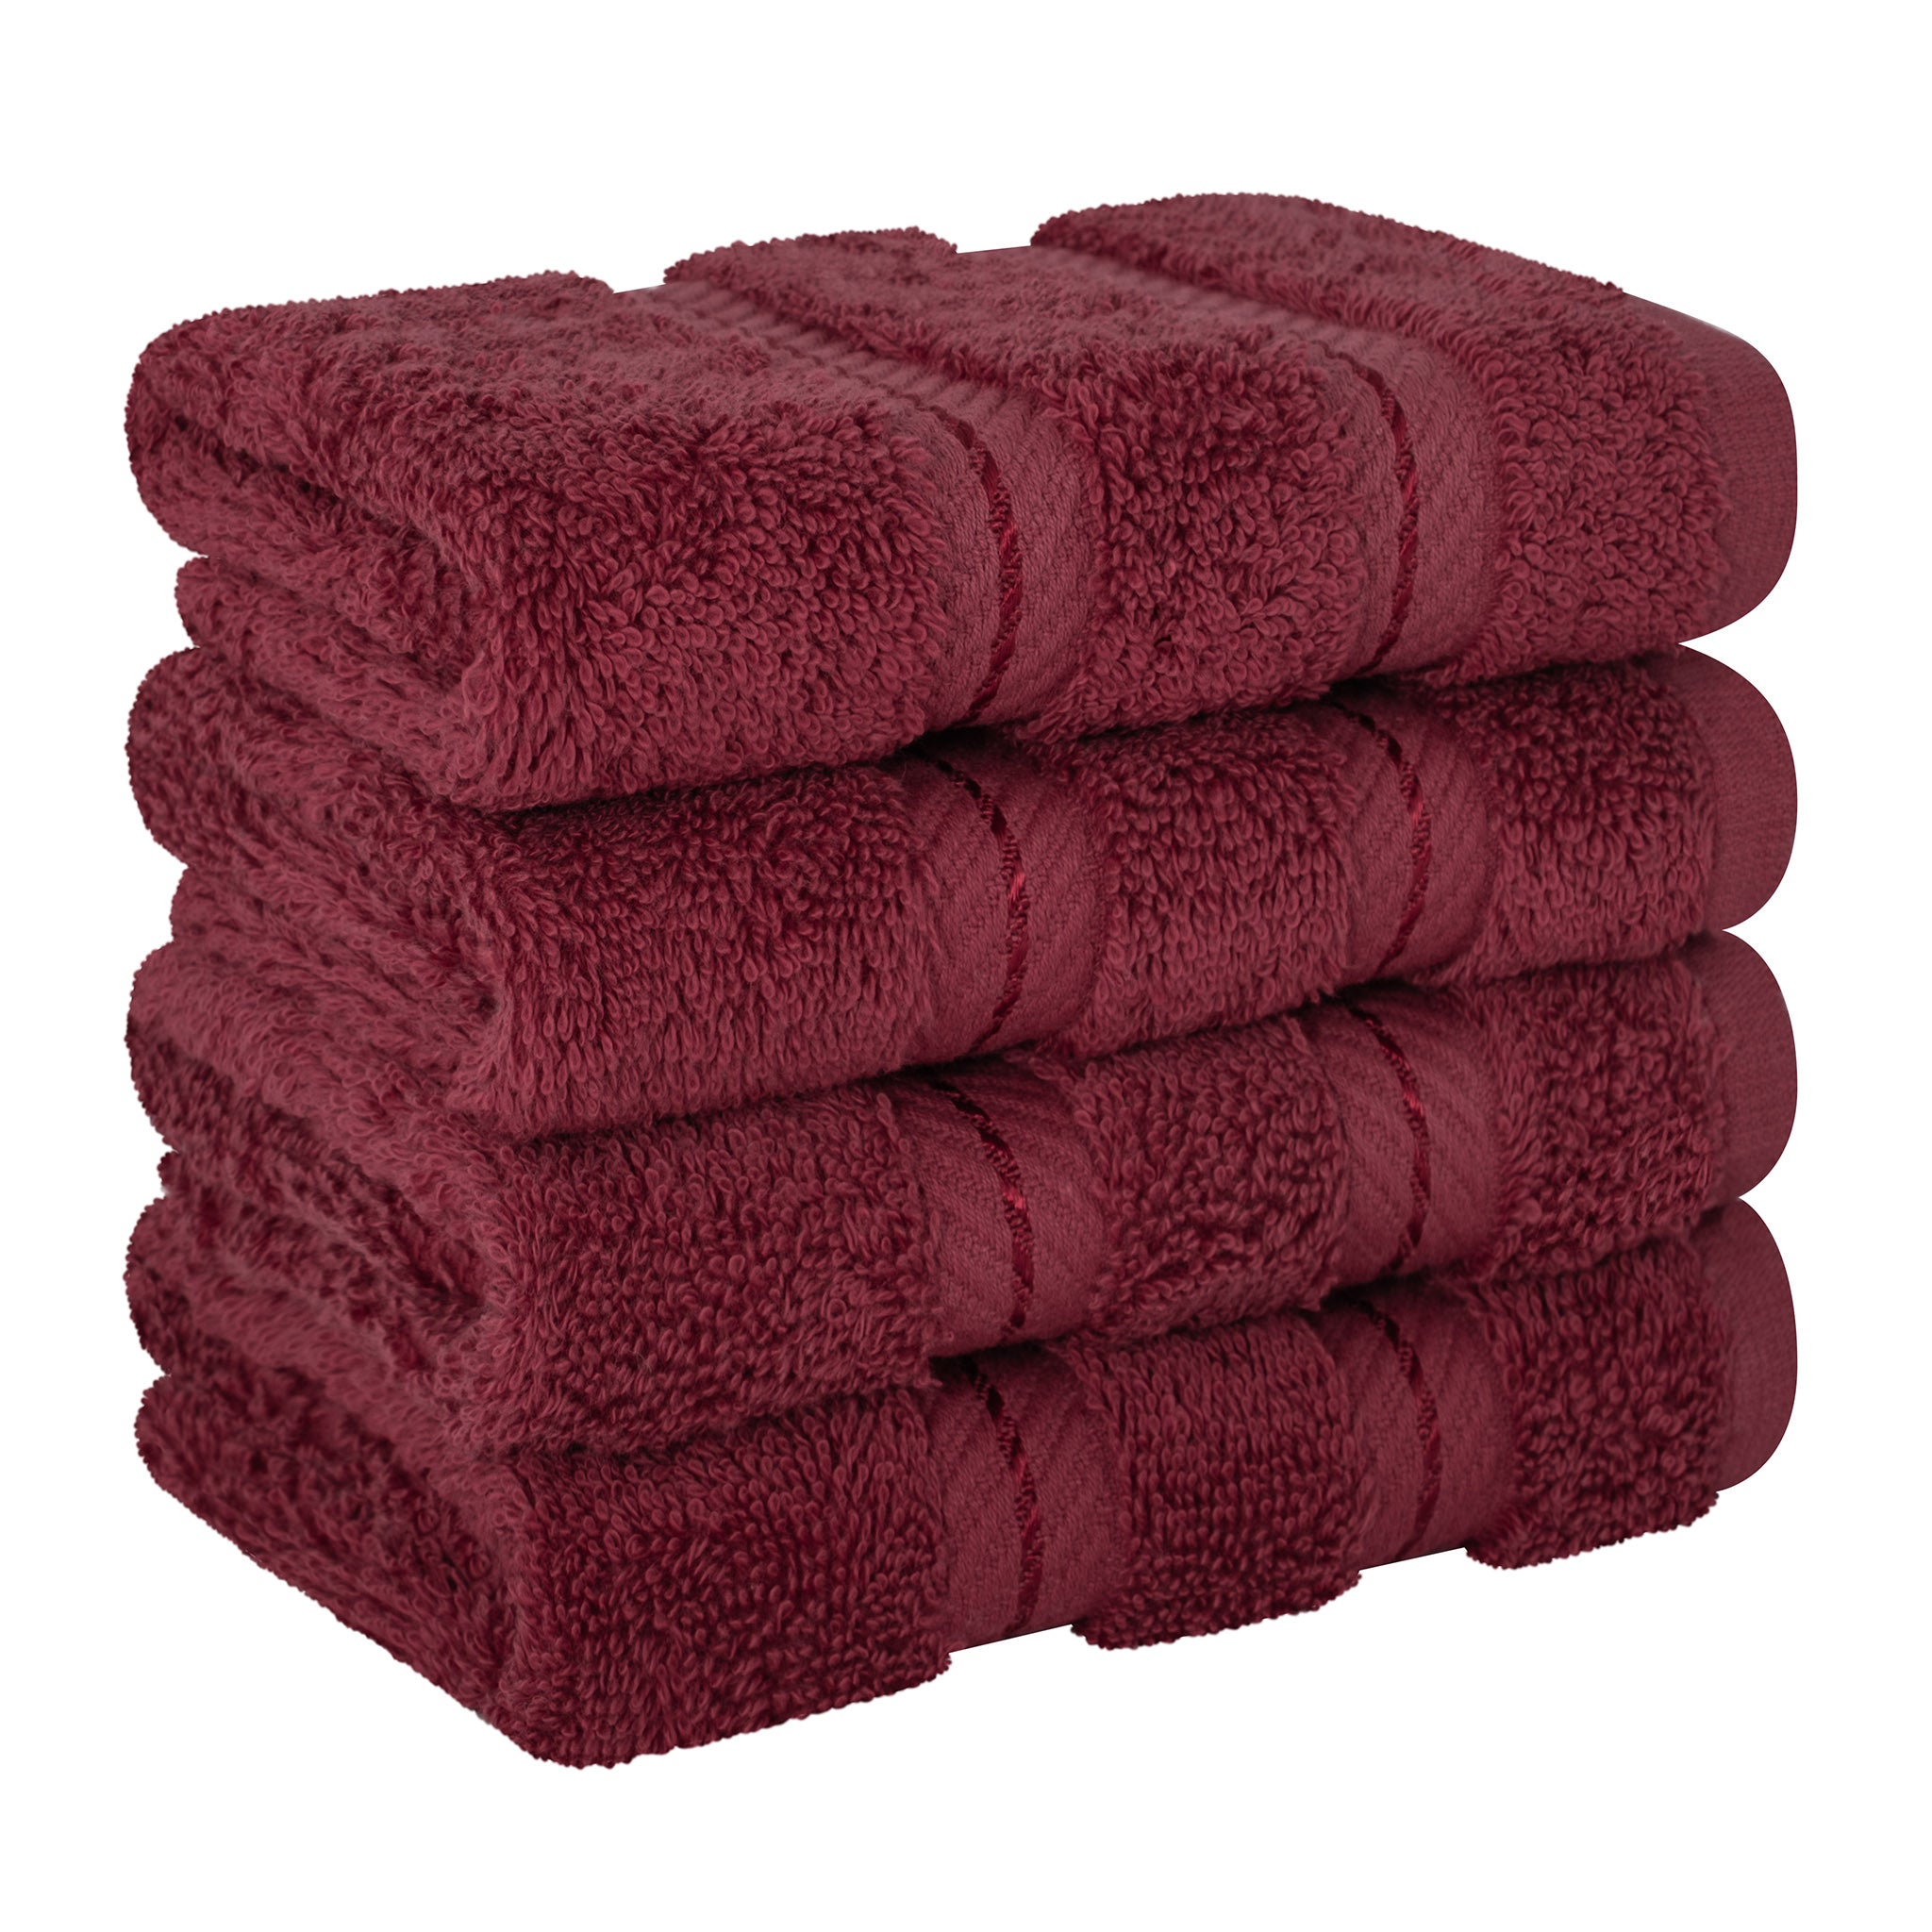 American Soft Linen 100% Turkish Cotton 4 Piece Washcloth Set bordeaux-red-6